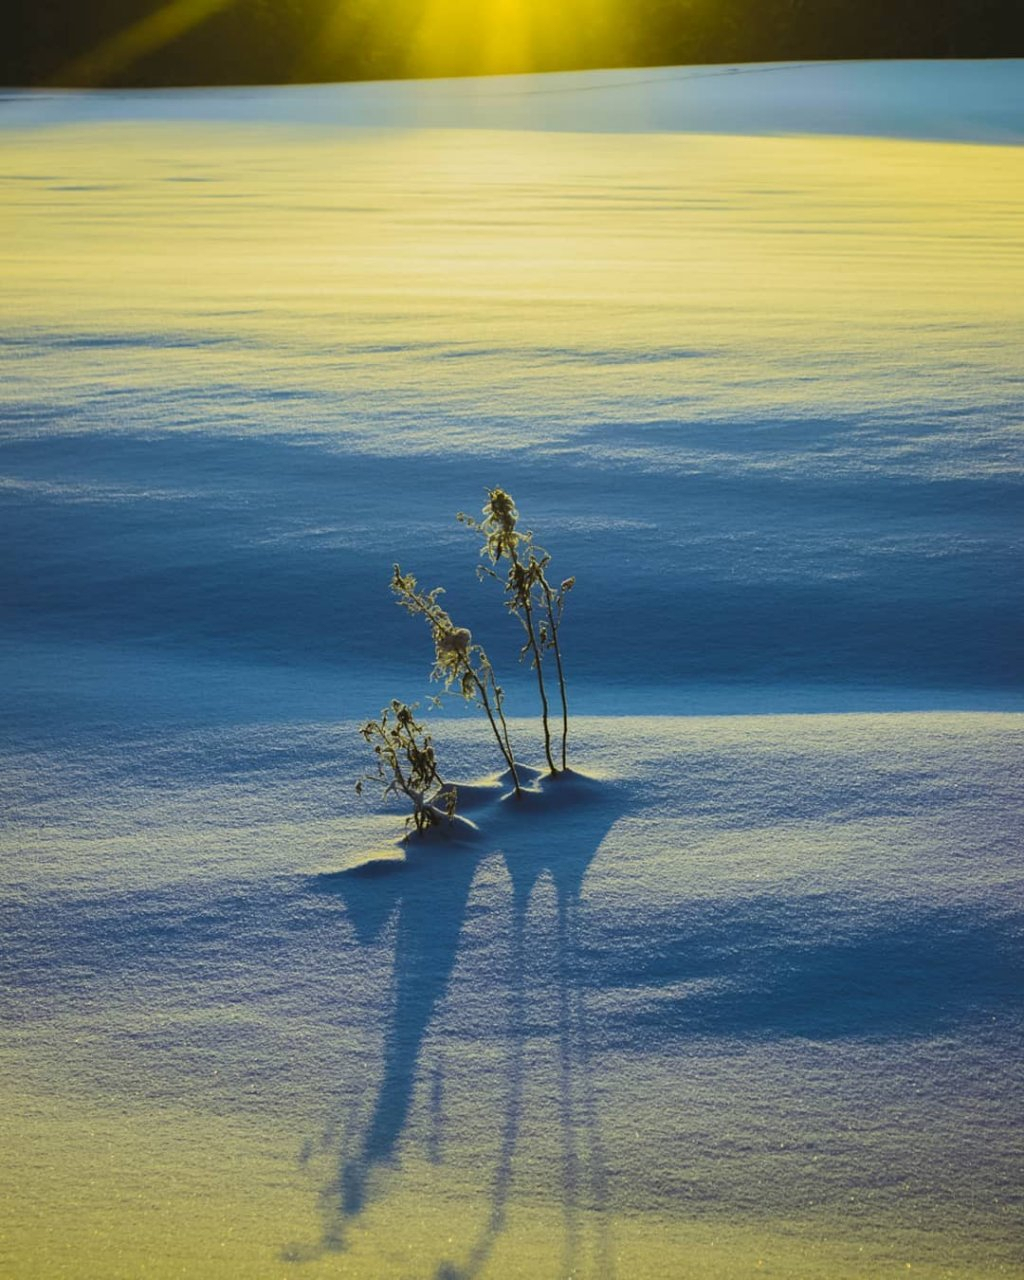 Фото дня от сыктывкарца: простой зимний пейзаж